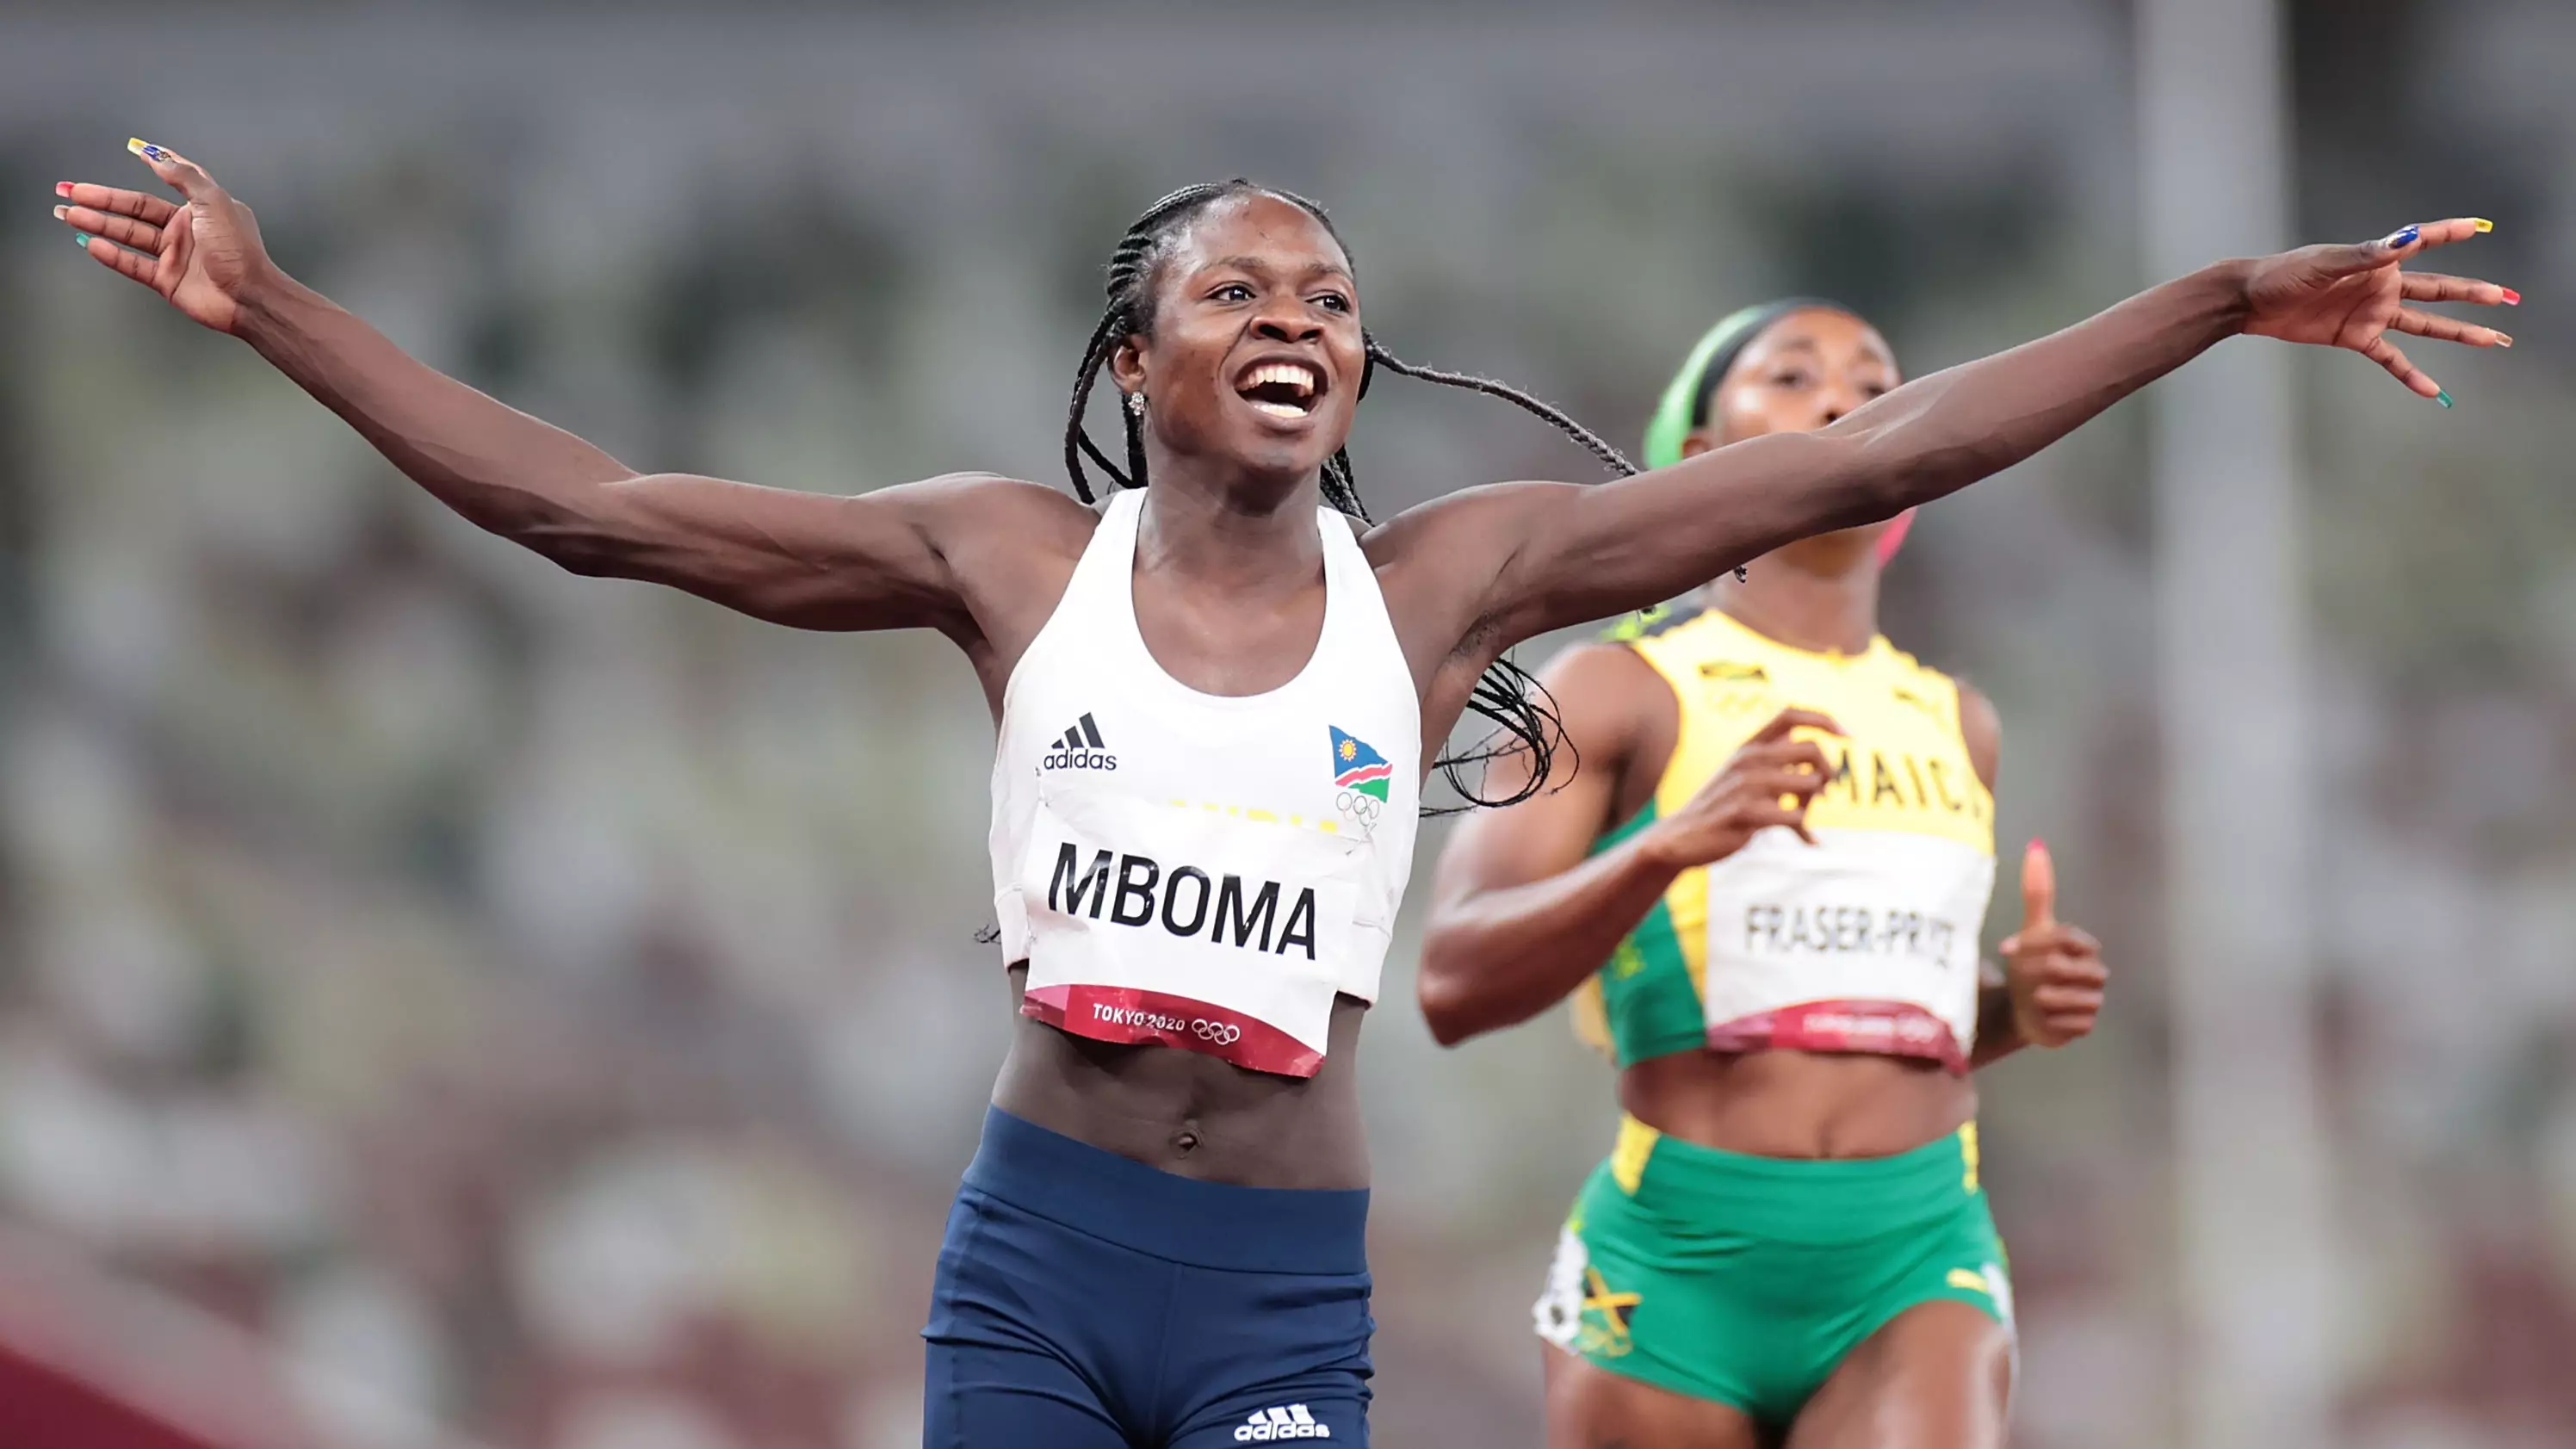 Former Athlete Demands Gender Test For Silver Medallist Christine Mboma Because She's Too Fast